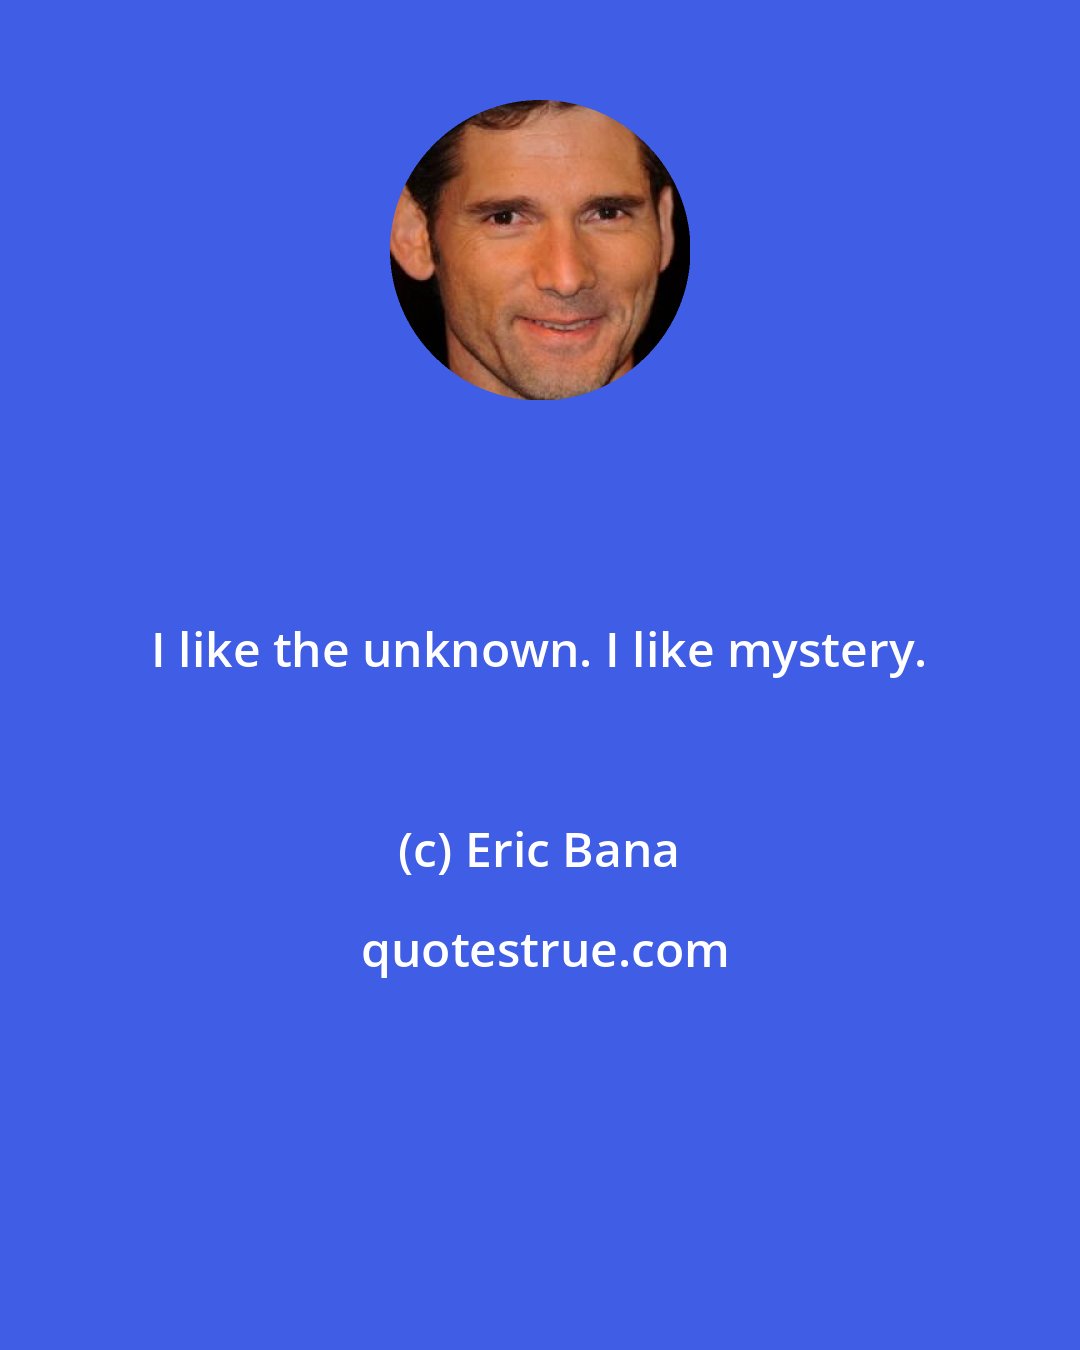 Eric Bana: I like the unknown. I like mystery.